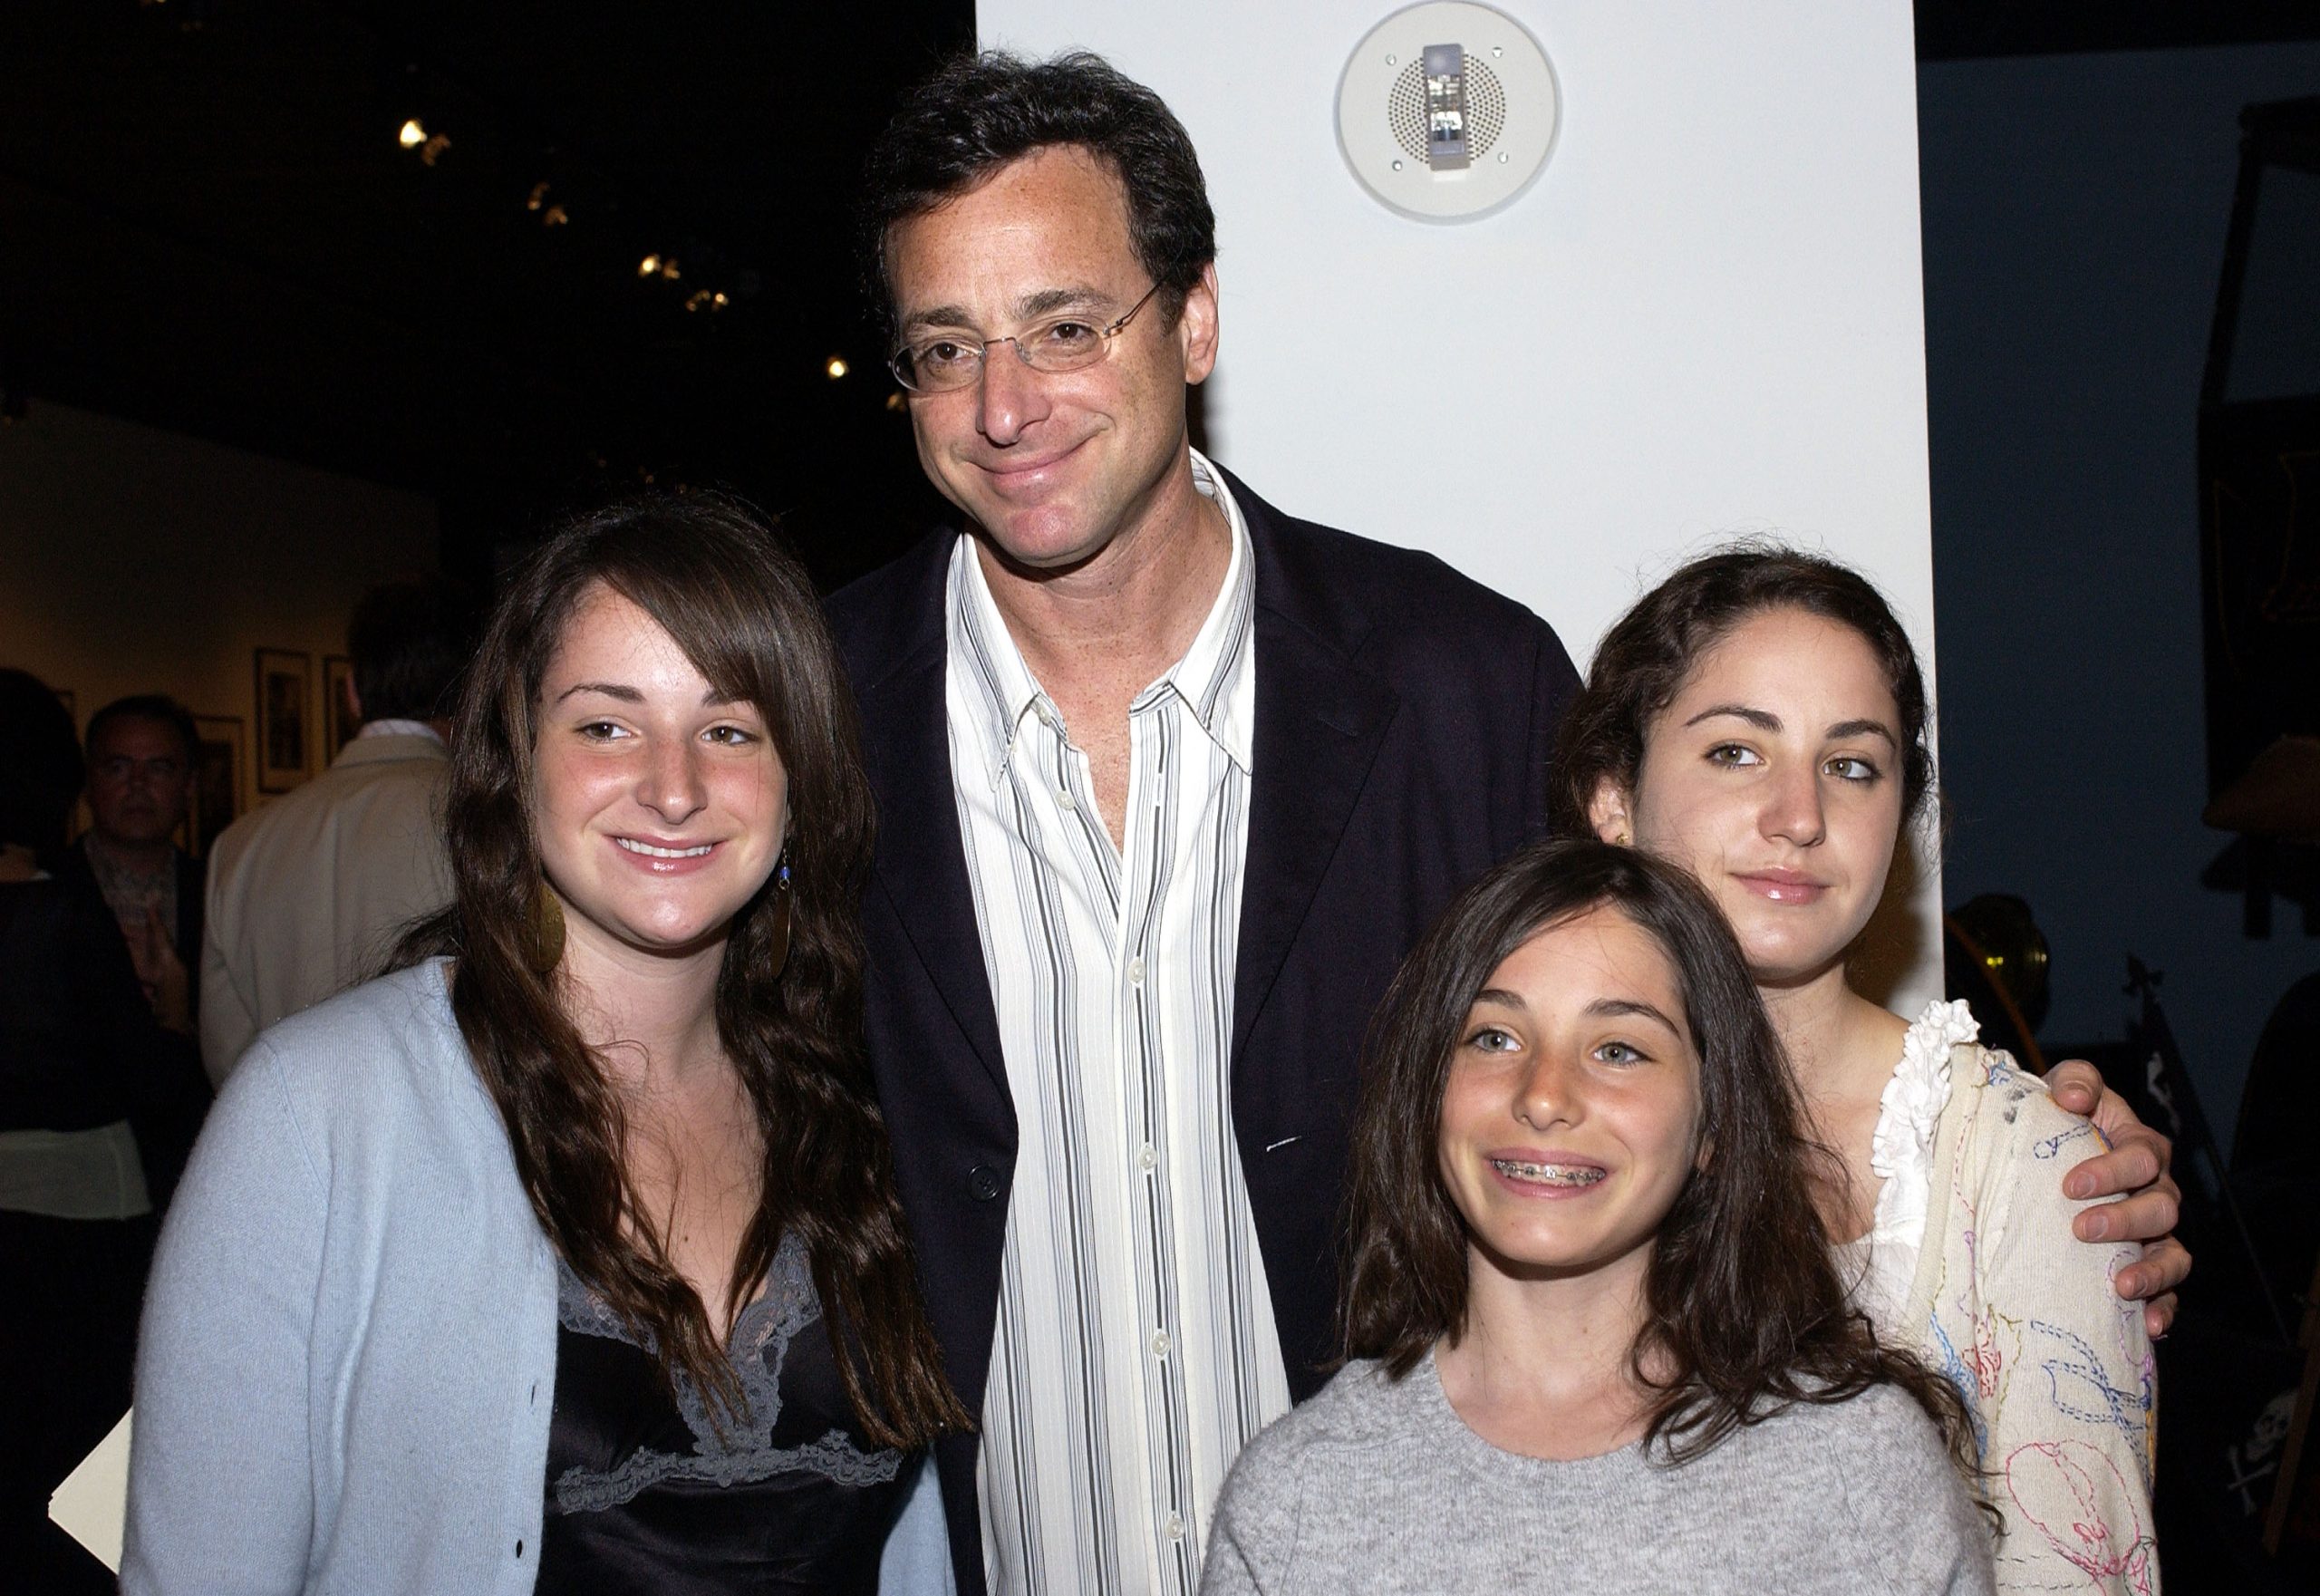 Bob Saget poses with his three daughters Lara, Jennifer, and Aubrey at an event.